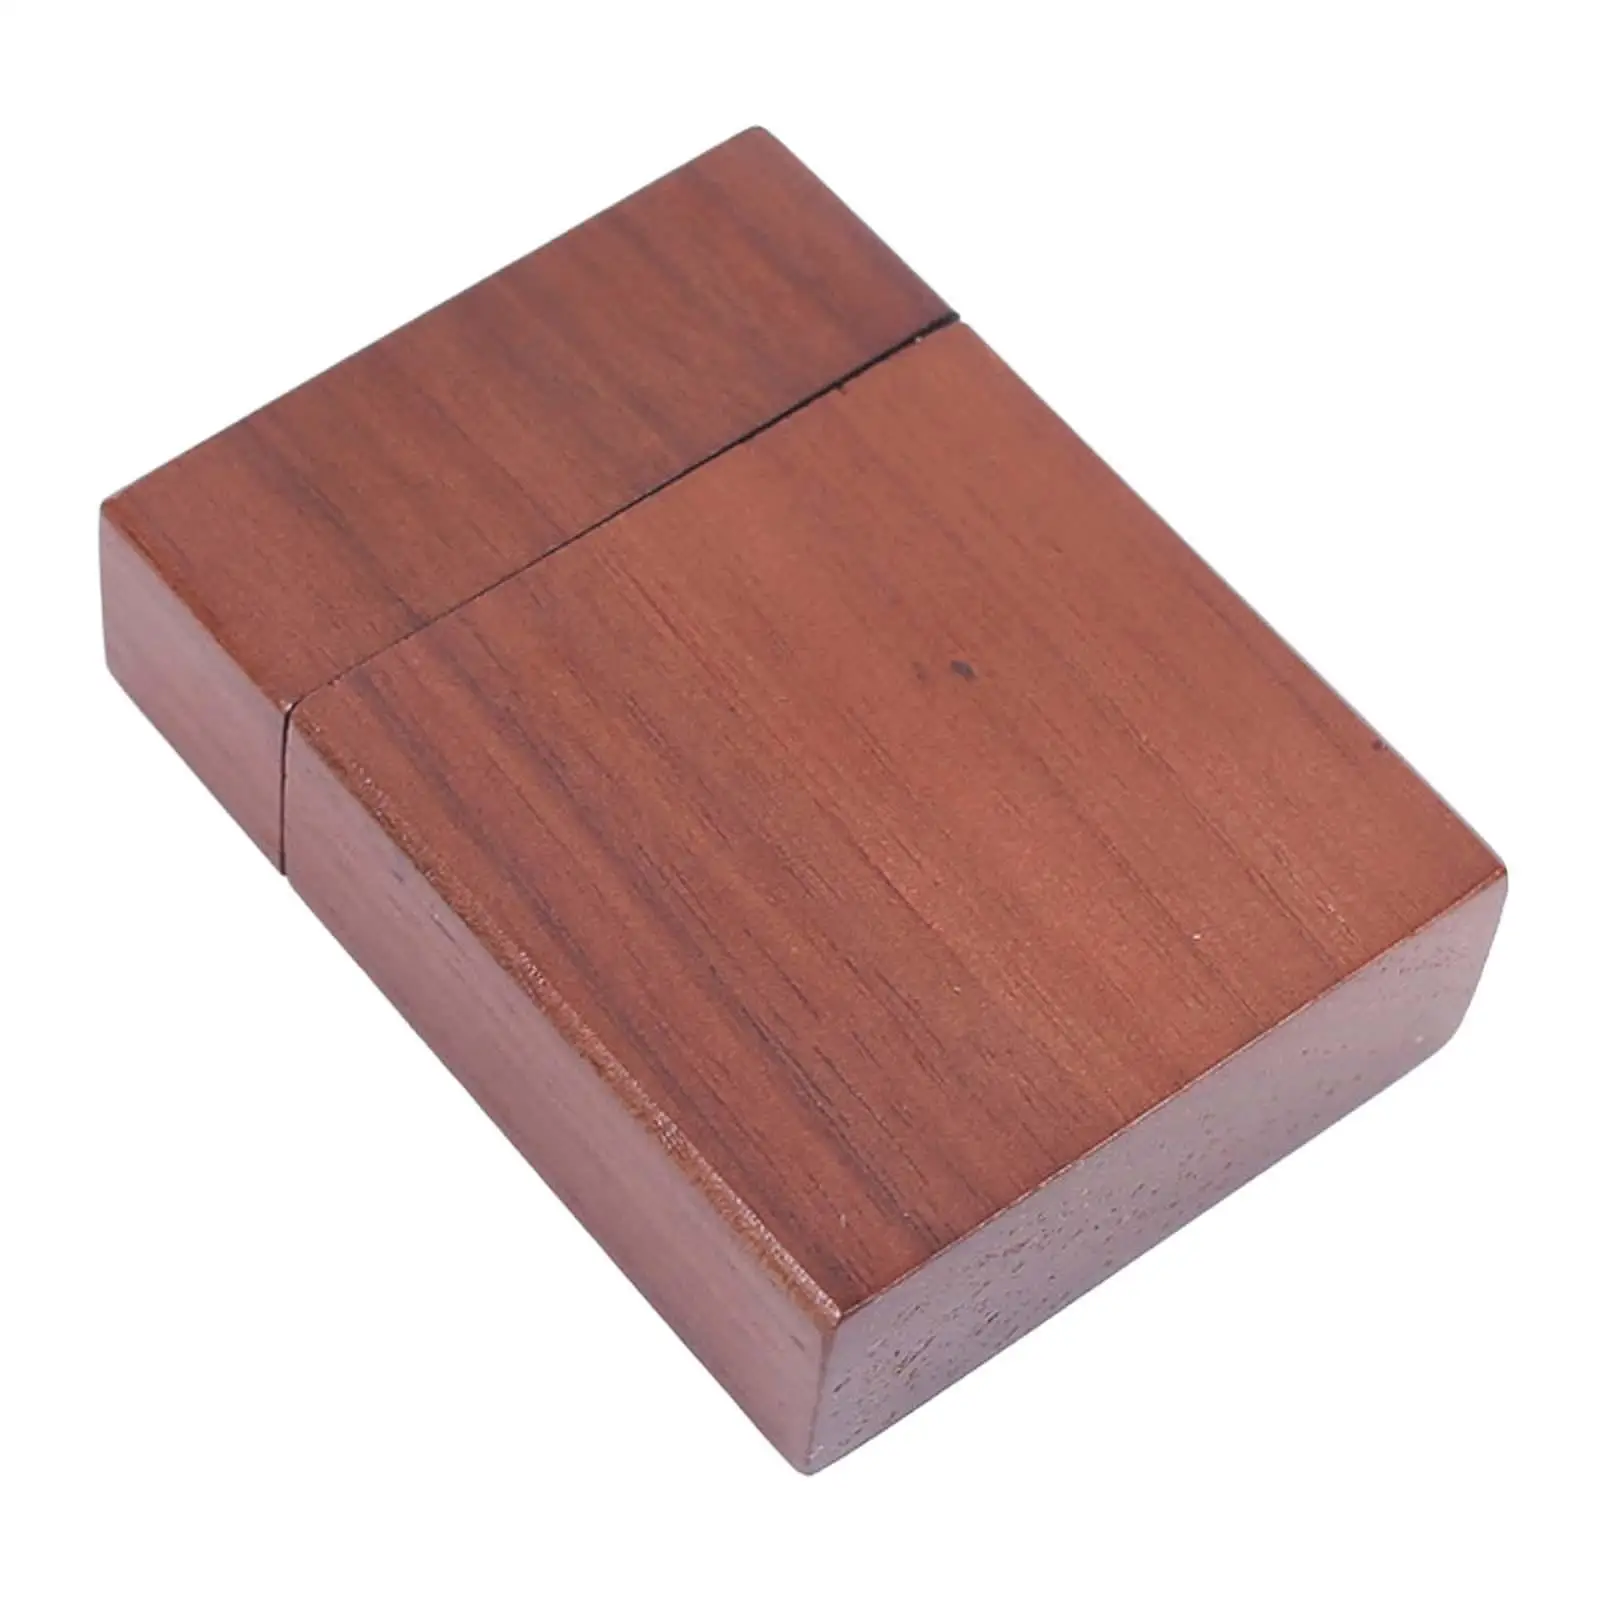 Wooden Guitar Picks Case Handicraft Magnetic Closure Durable Guitar Pick Box